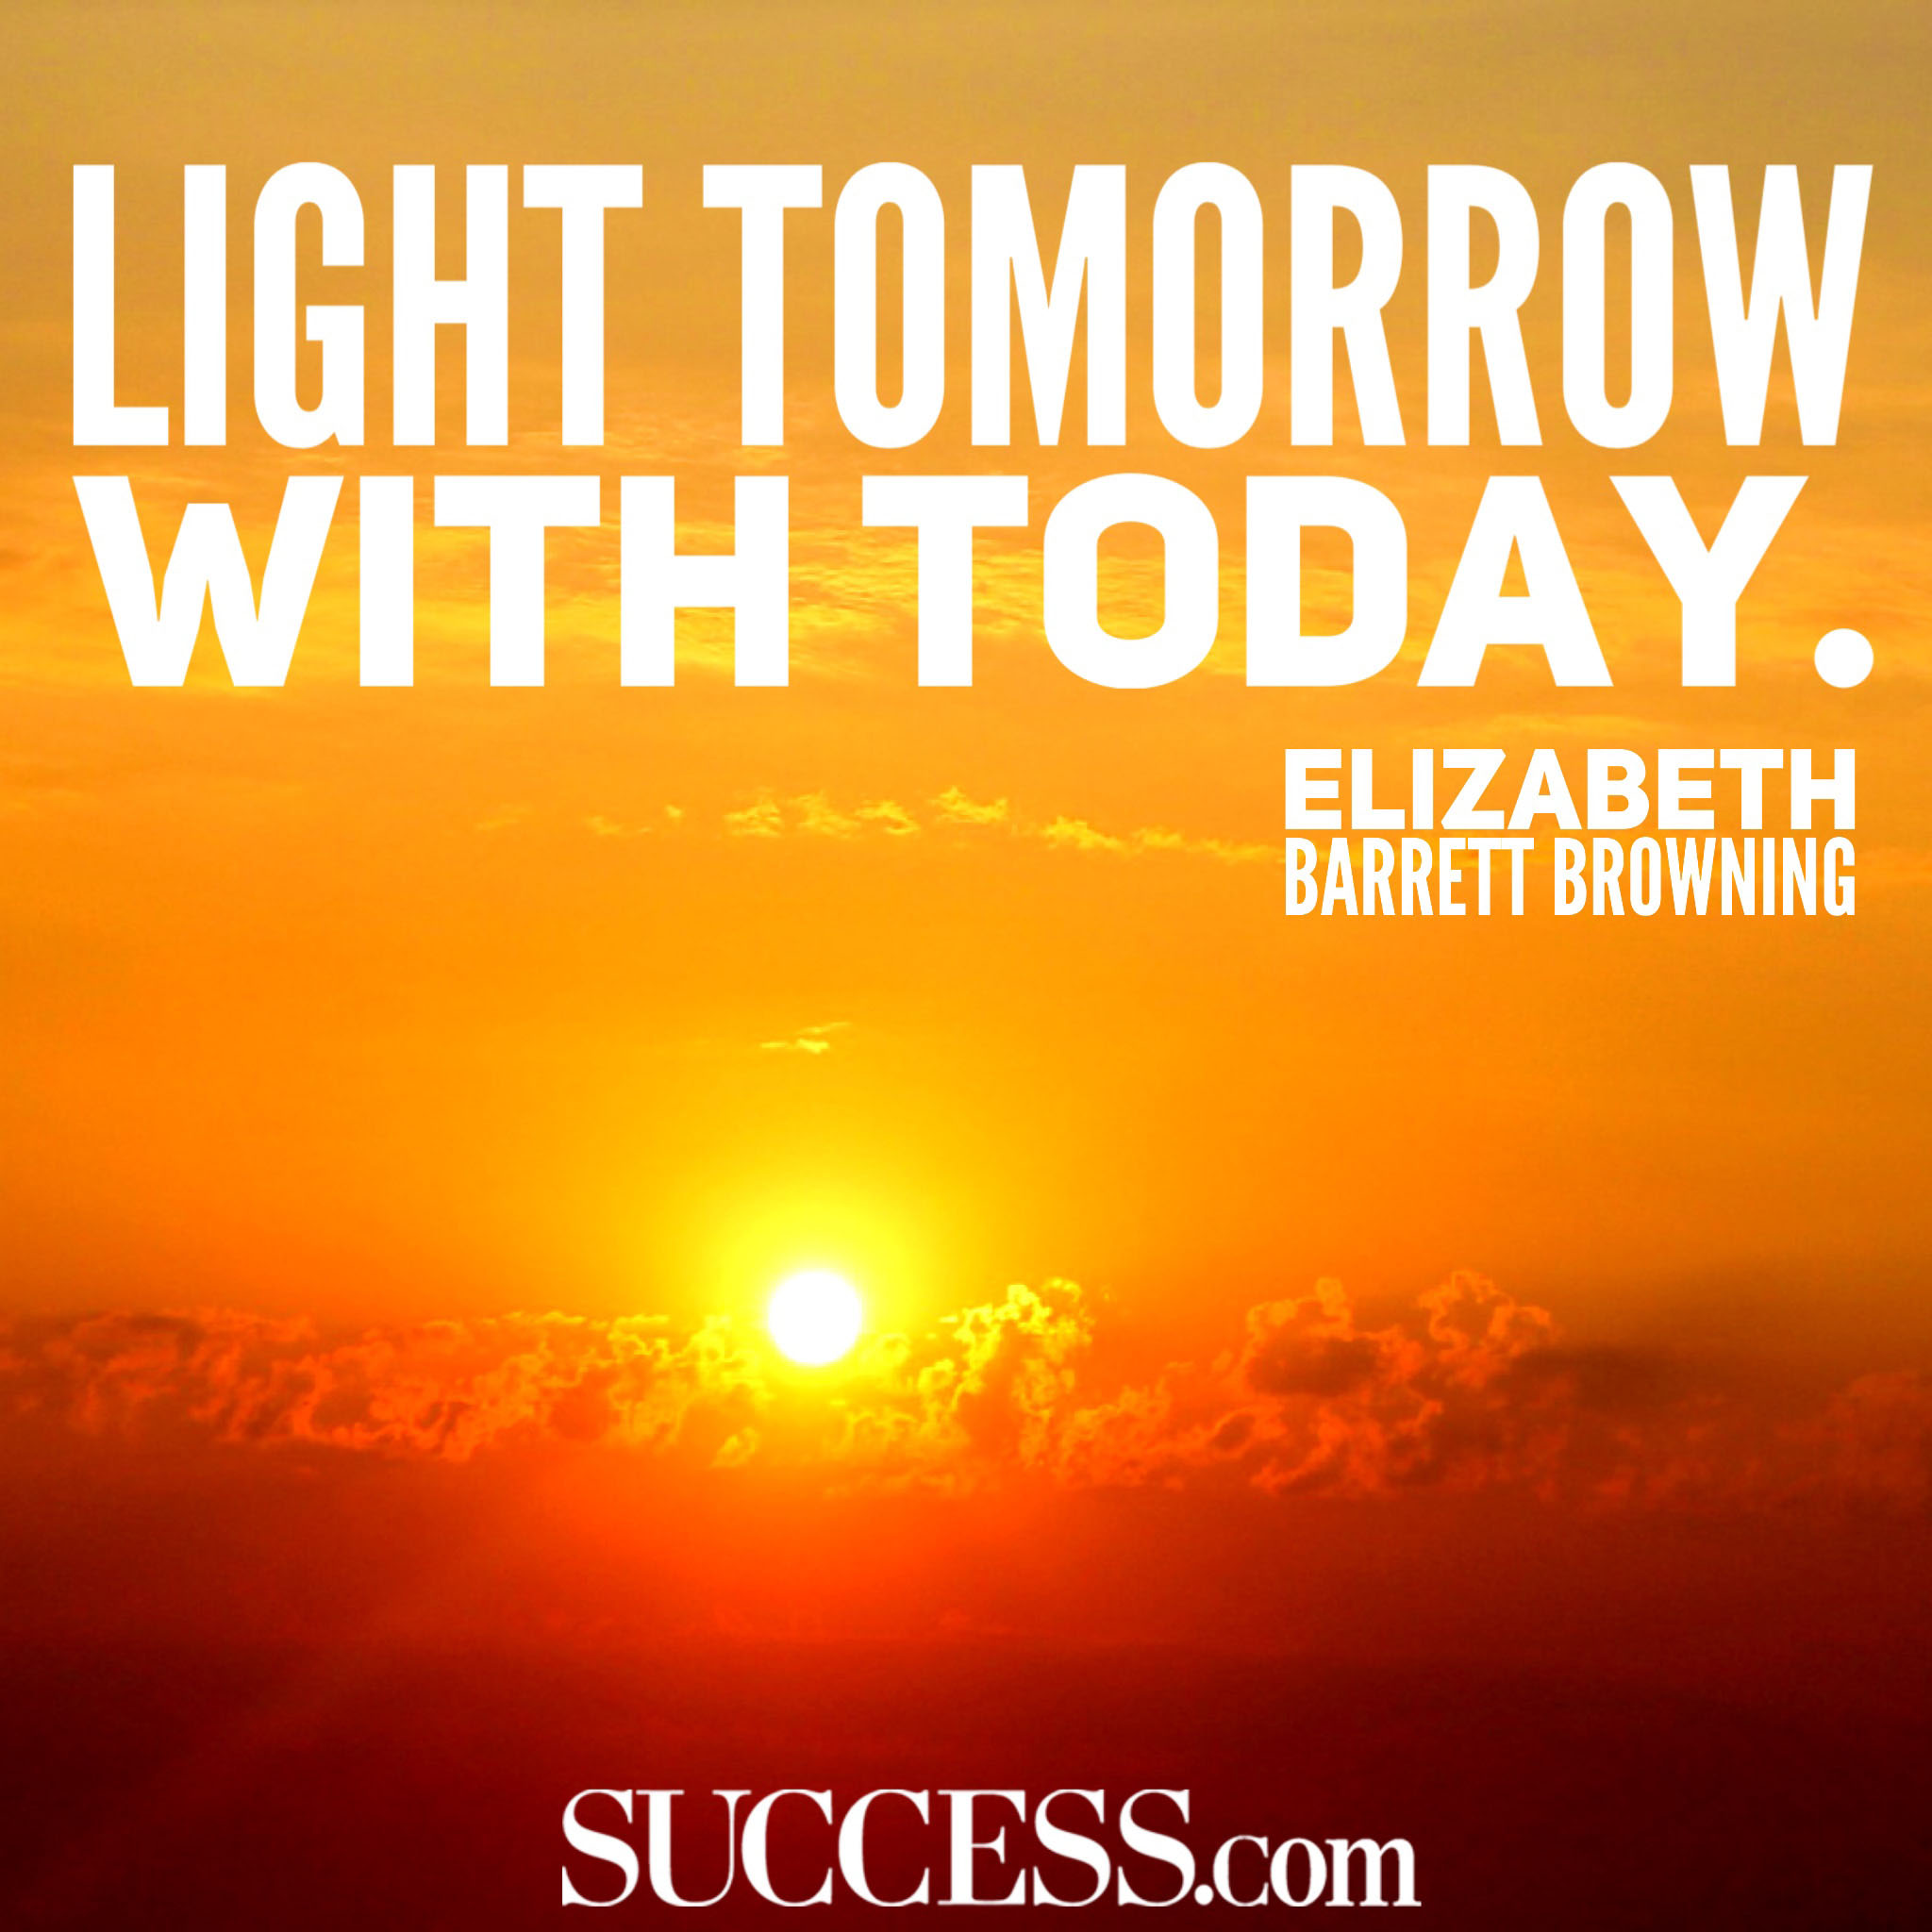 Light tomorrow with today. Elizabethe Barrett Browning